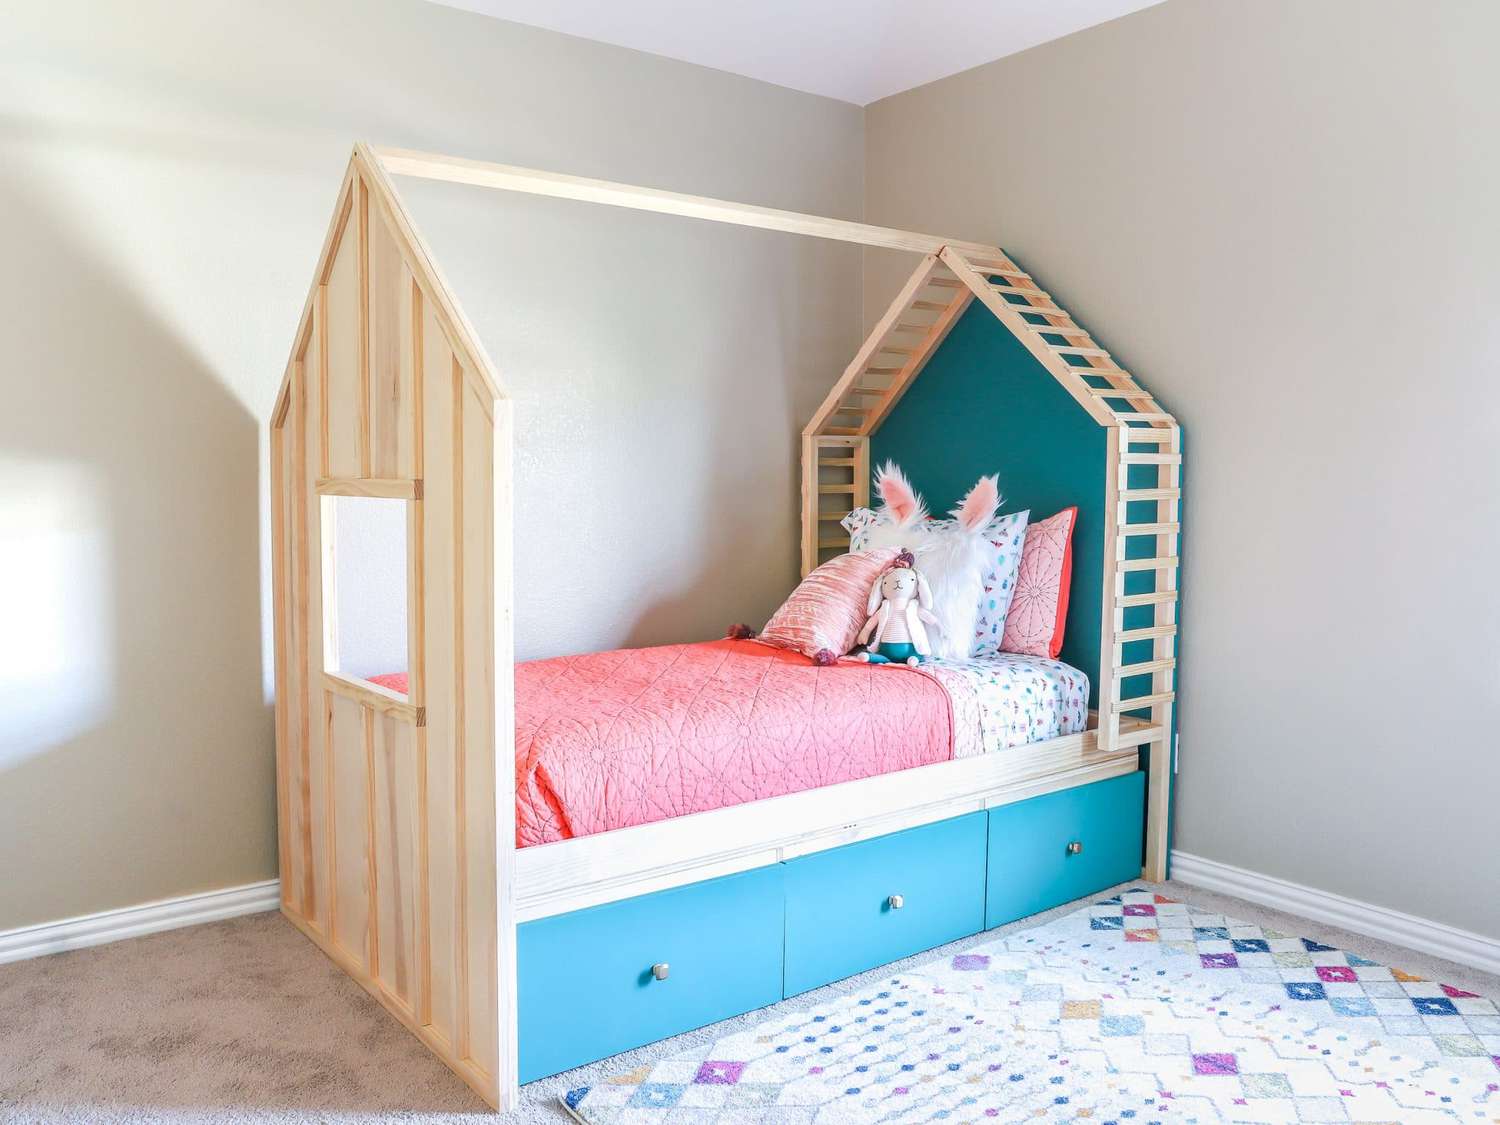 DIY kids bed with storage